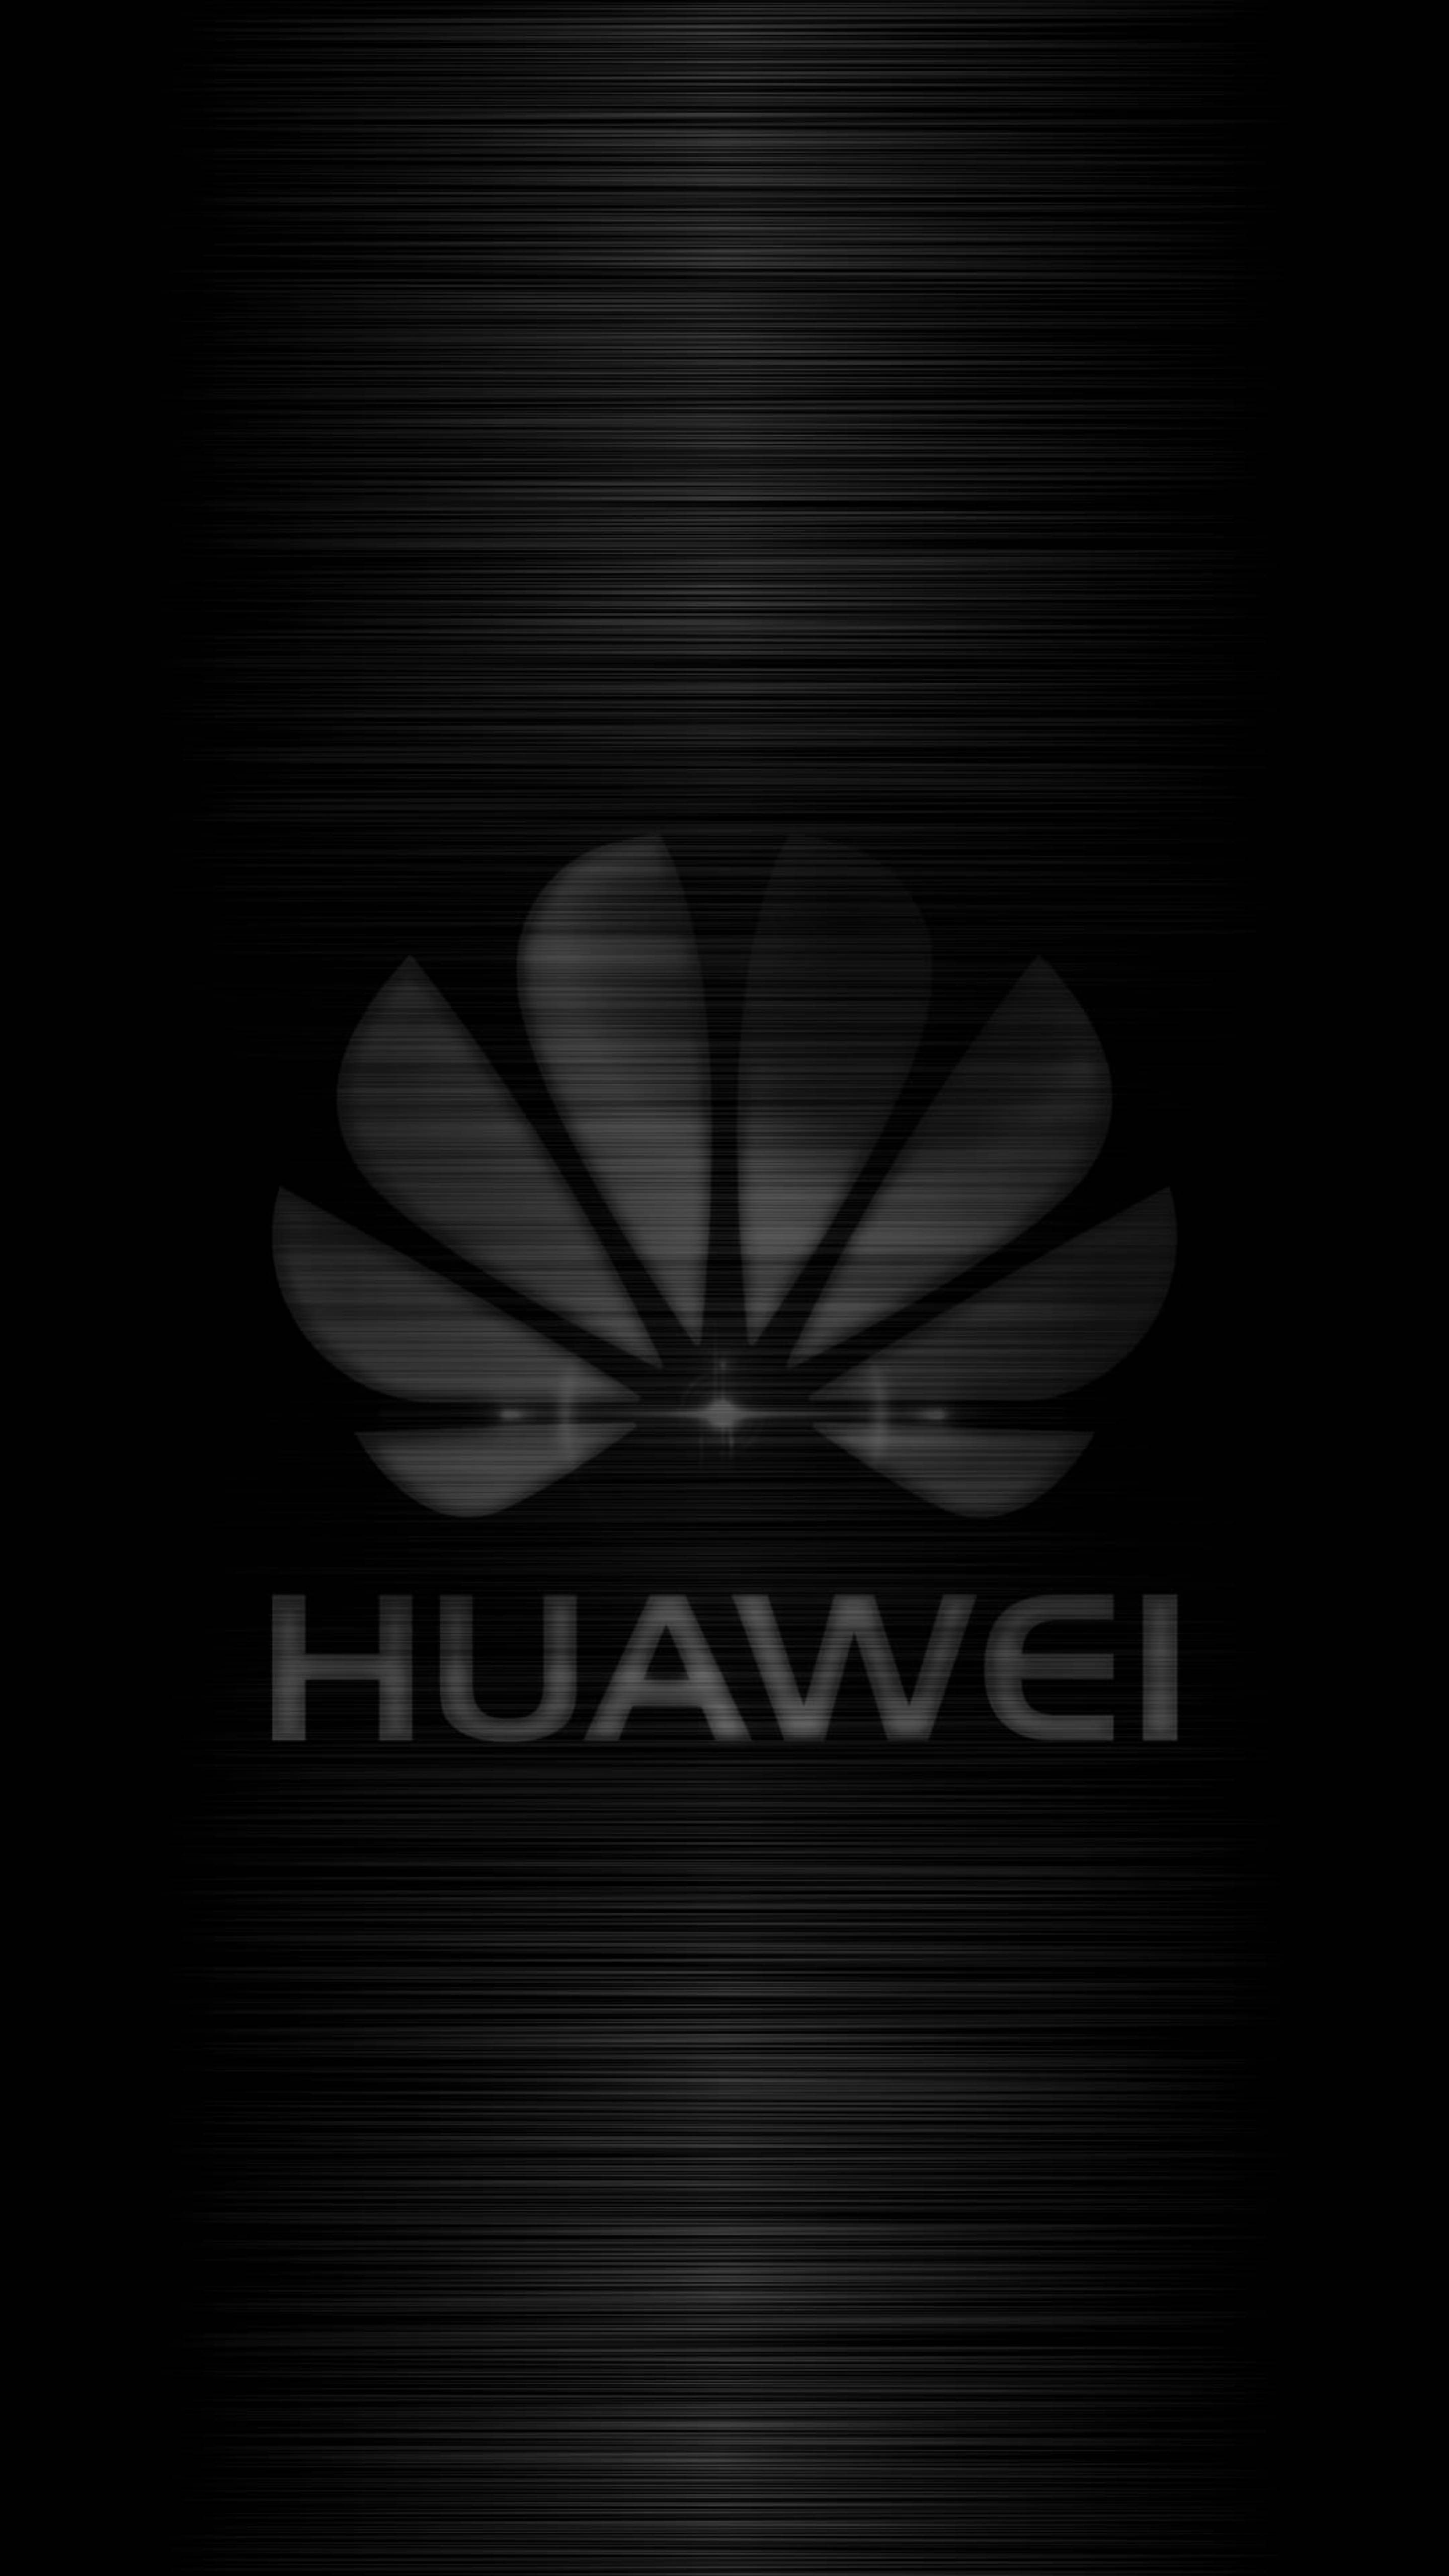 Huawei на черном фоне